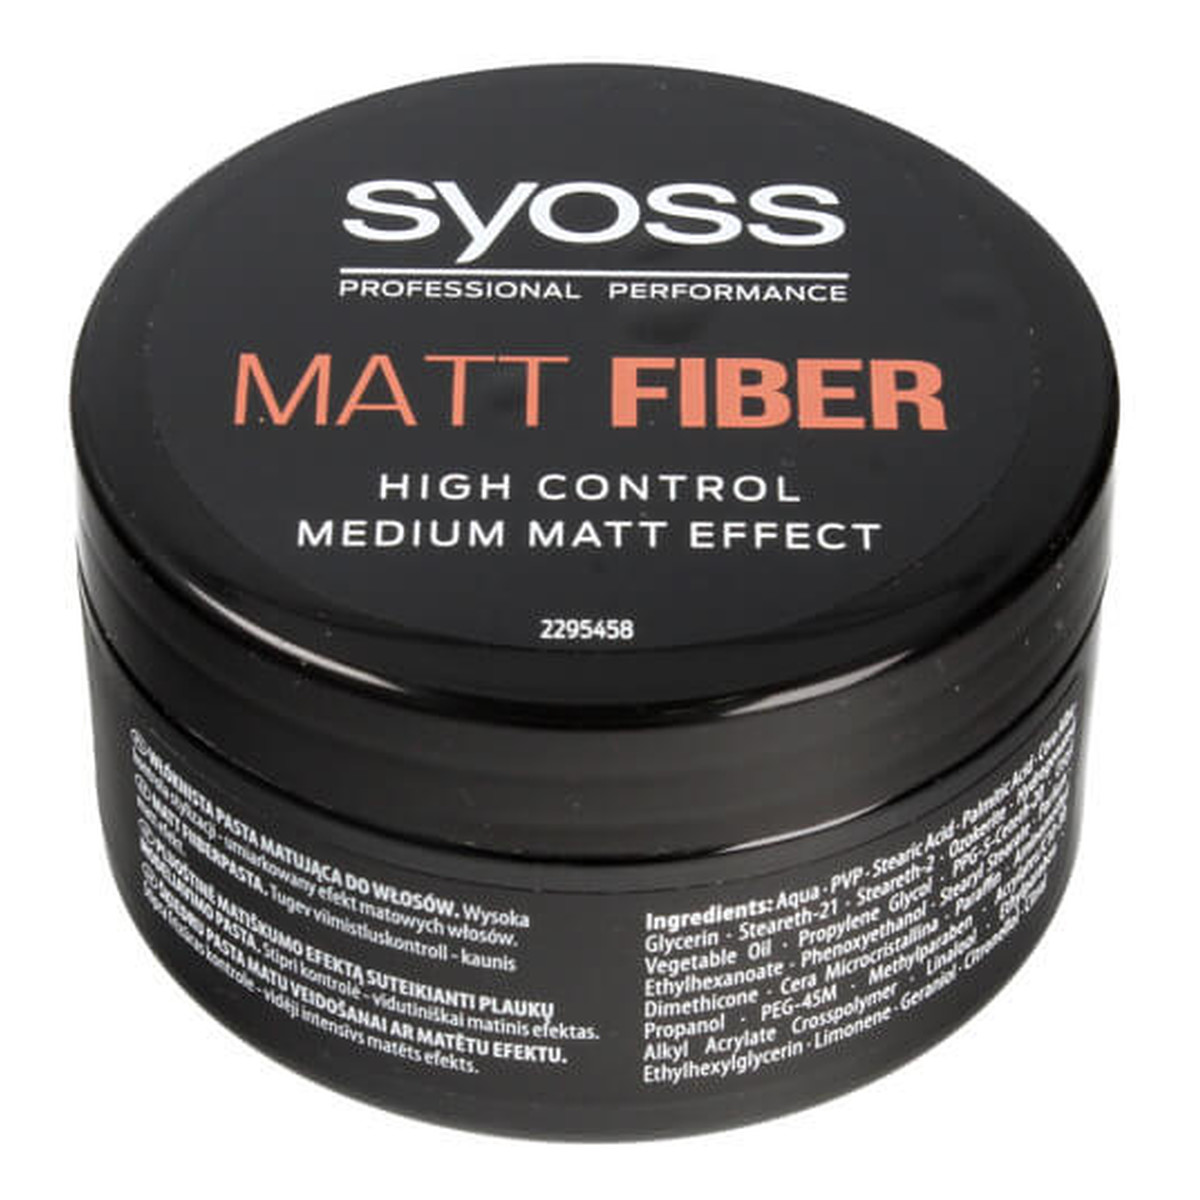 Syoss Matt Fiber Włóknista pasta matująca do włosów 100ml